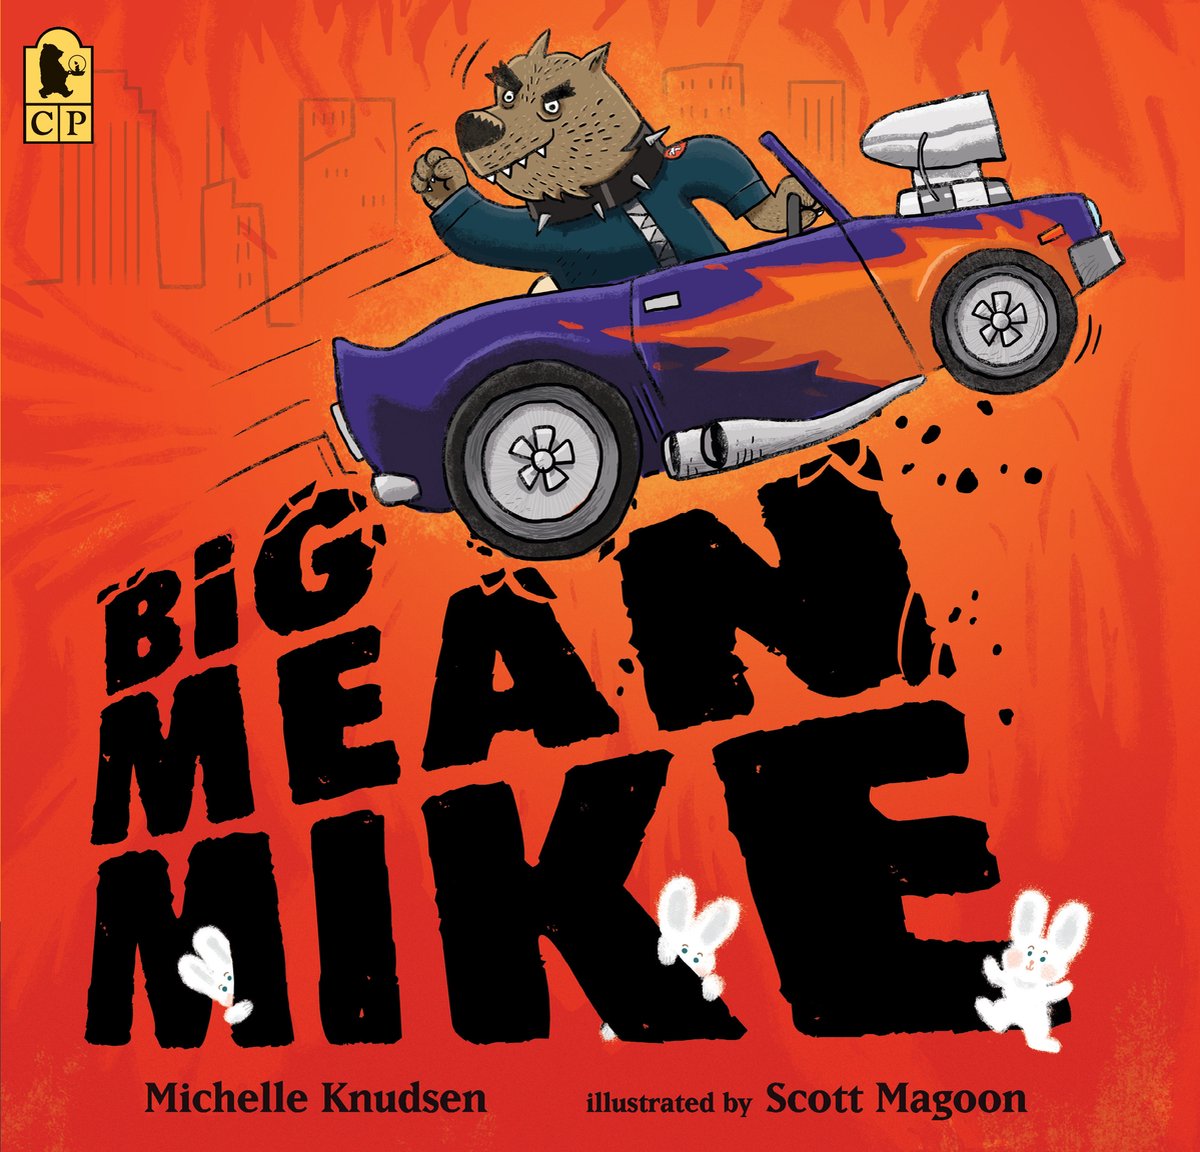 Big Mean Mike - Michelle Knudsen